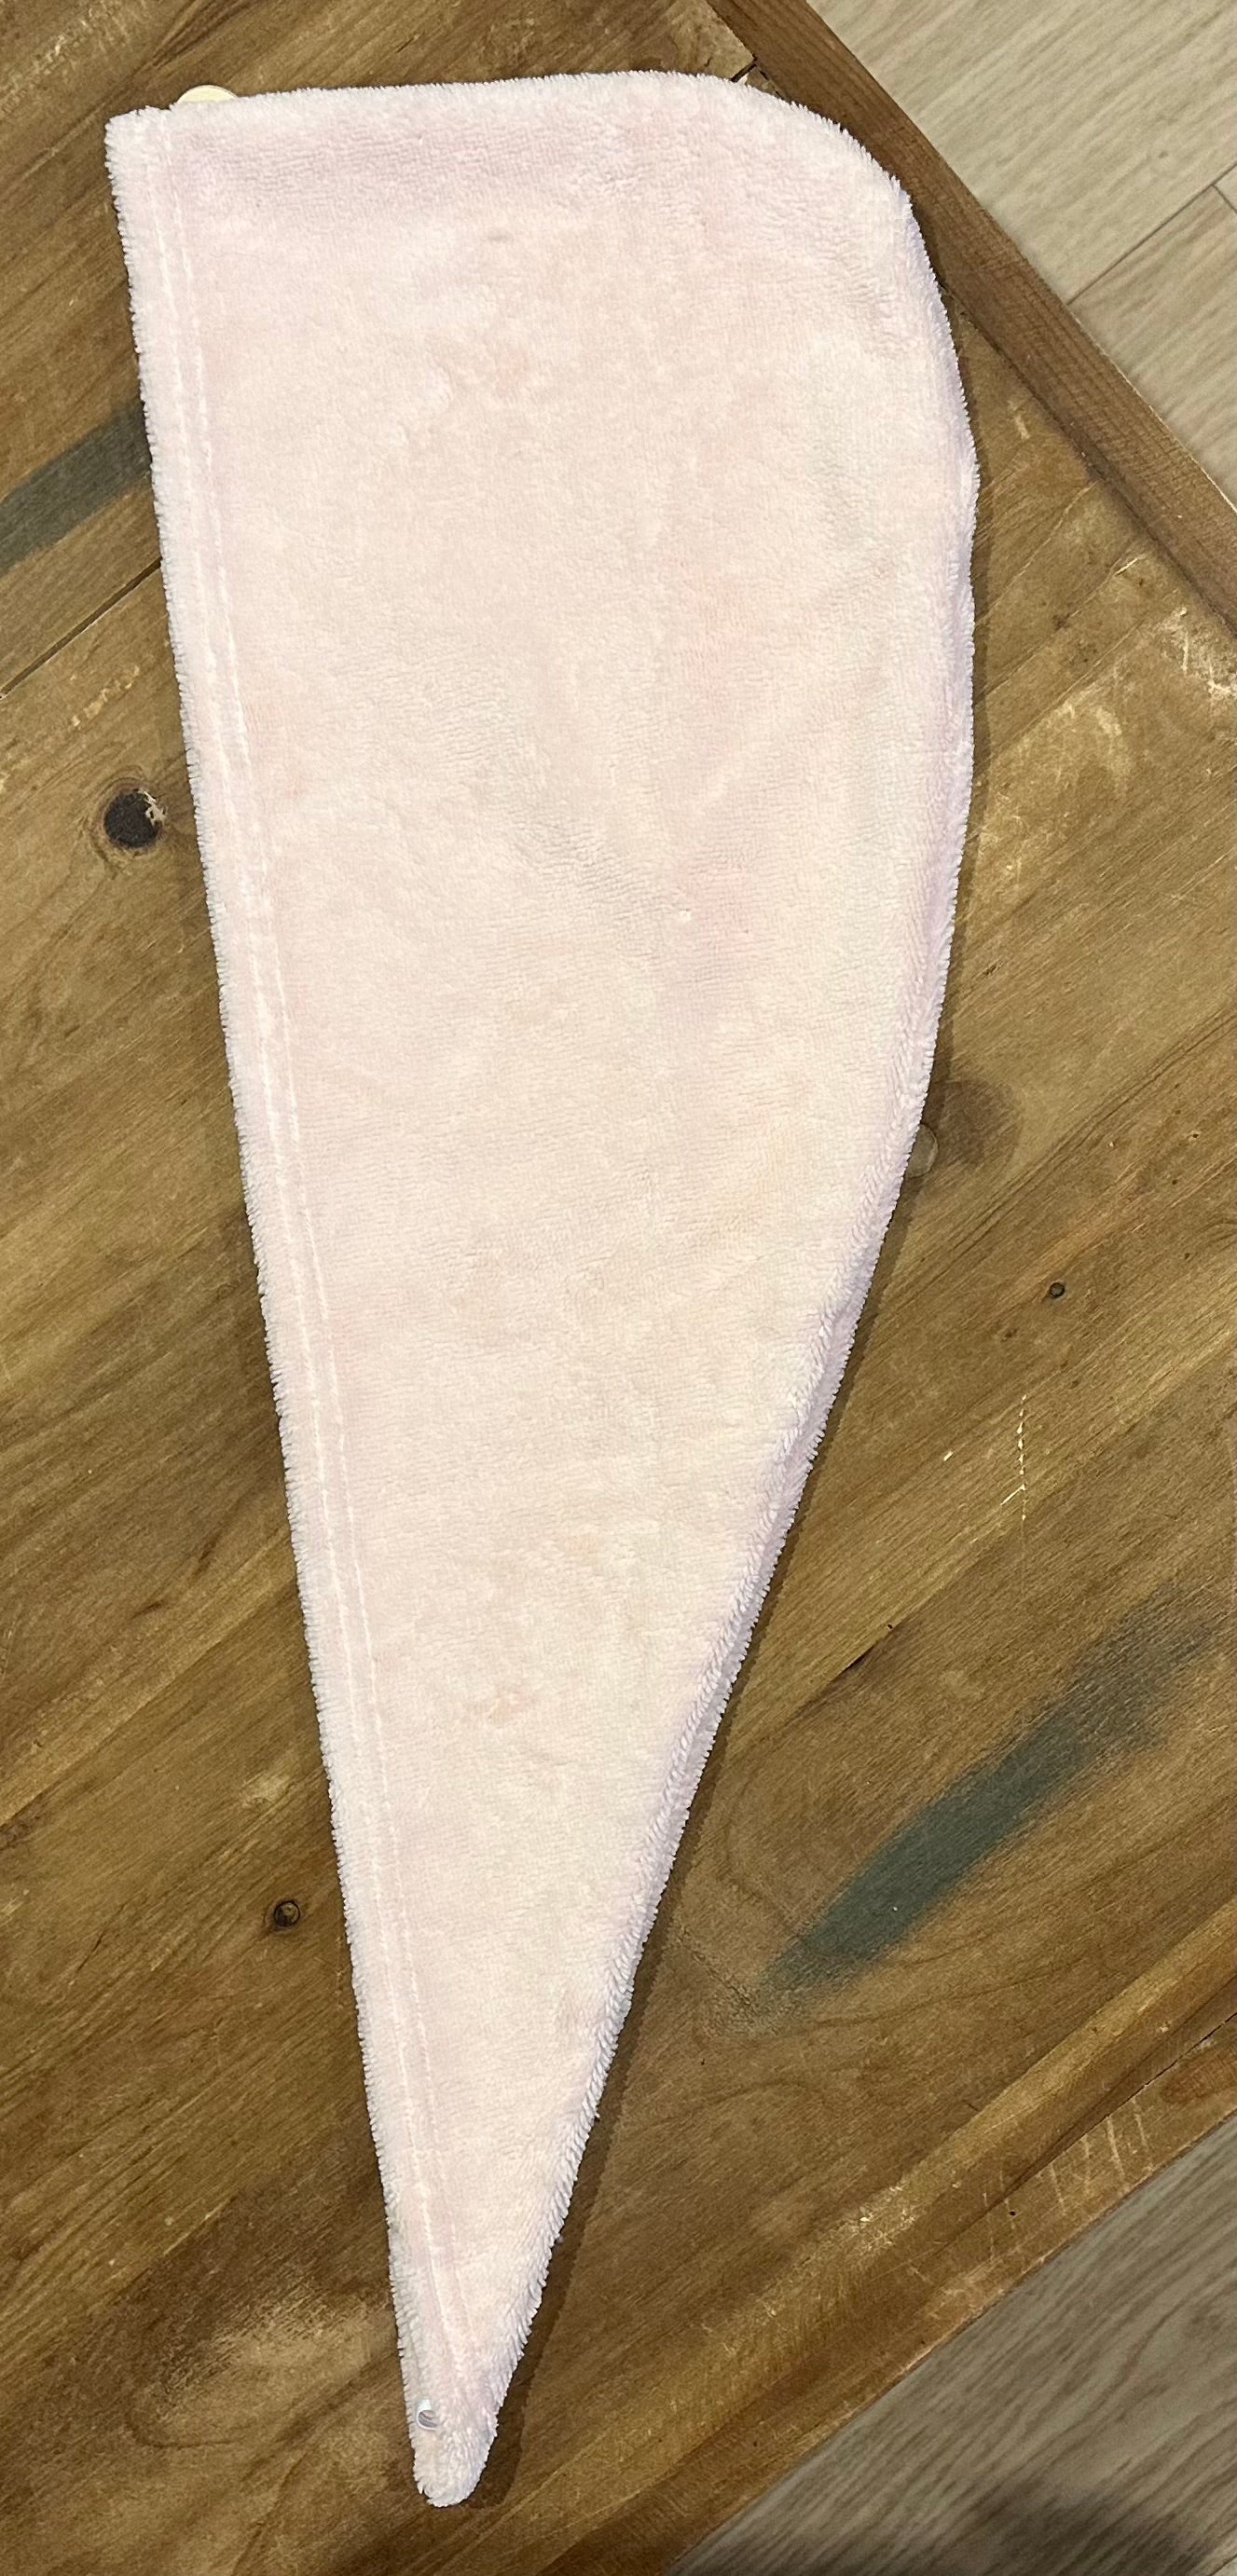 Kit beauté origami rose